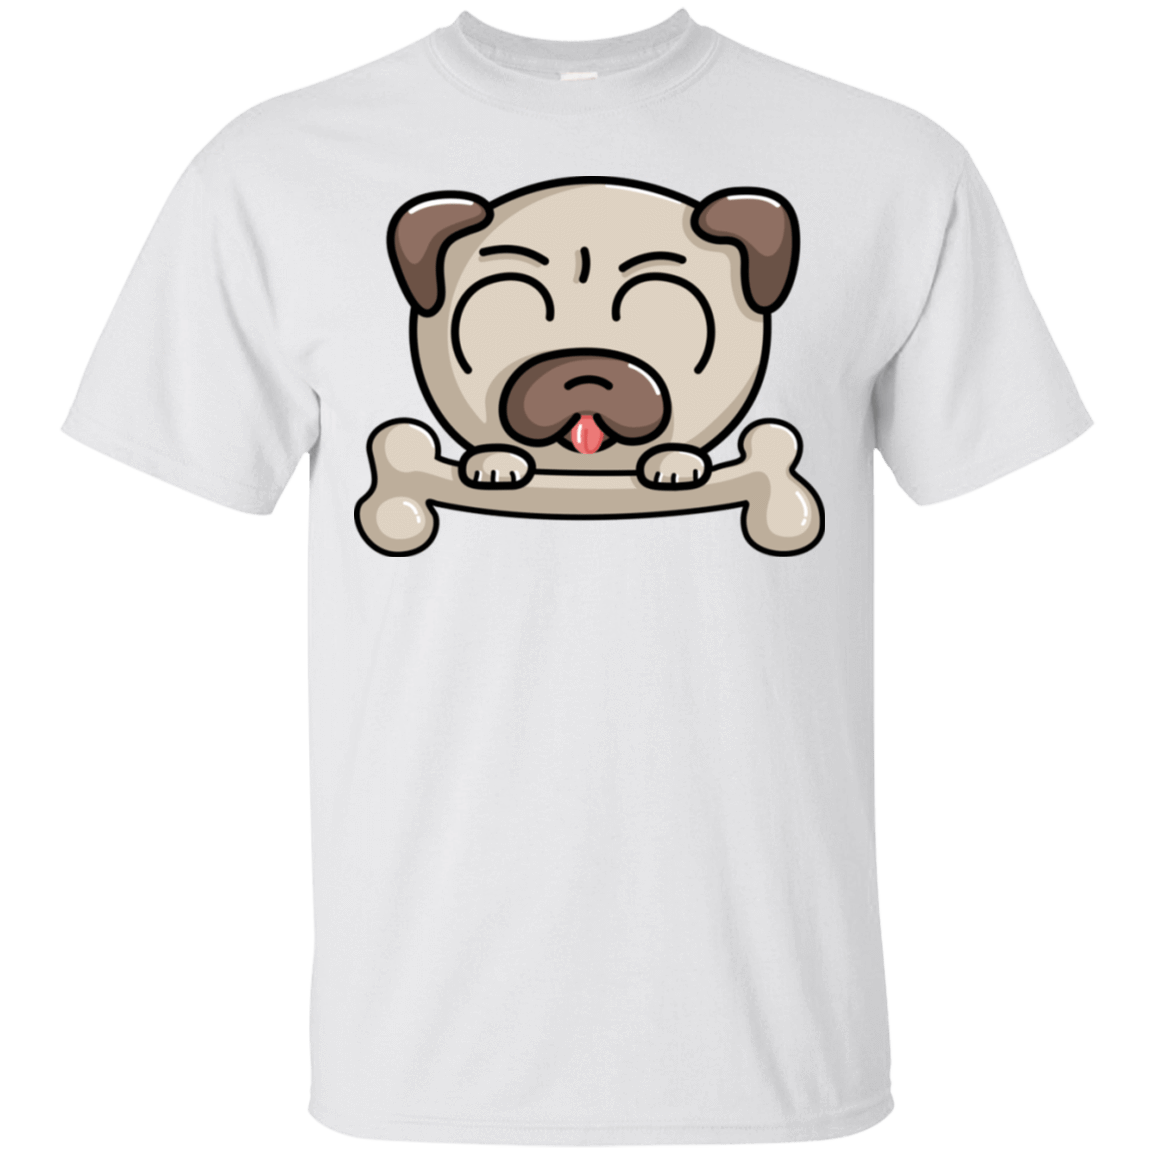 T-Shirts White / S Cute Pug and Bone T-Shirt